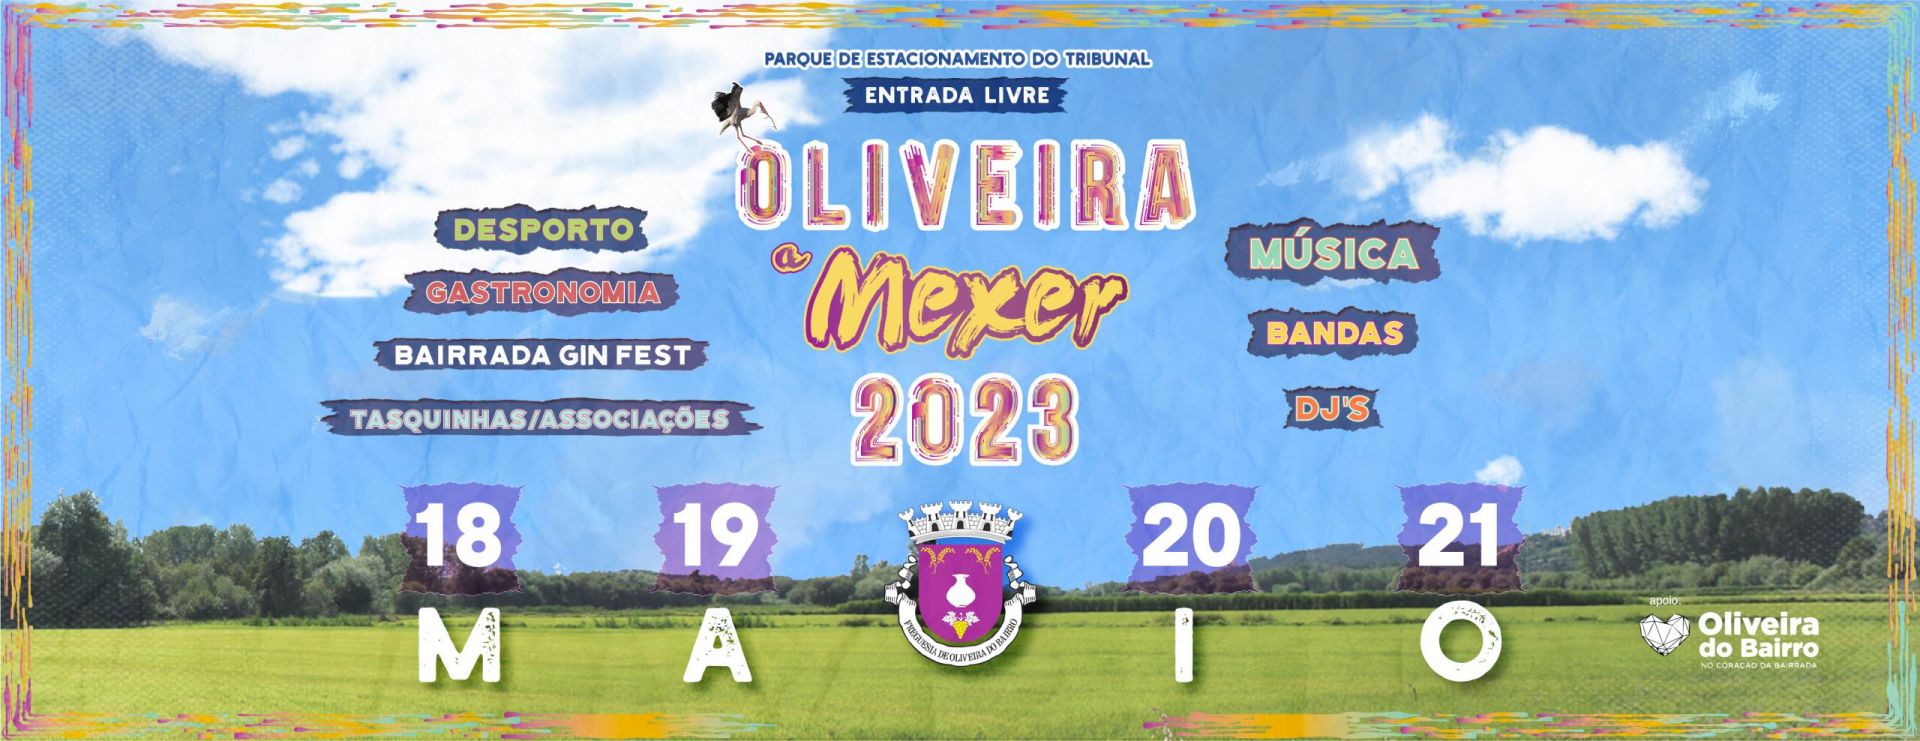 OLIVEIRA A MEXER